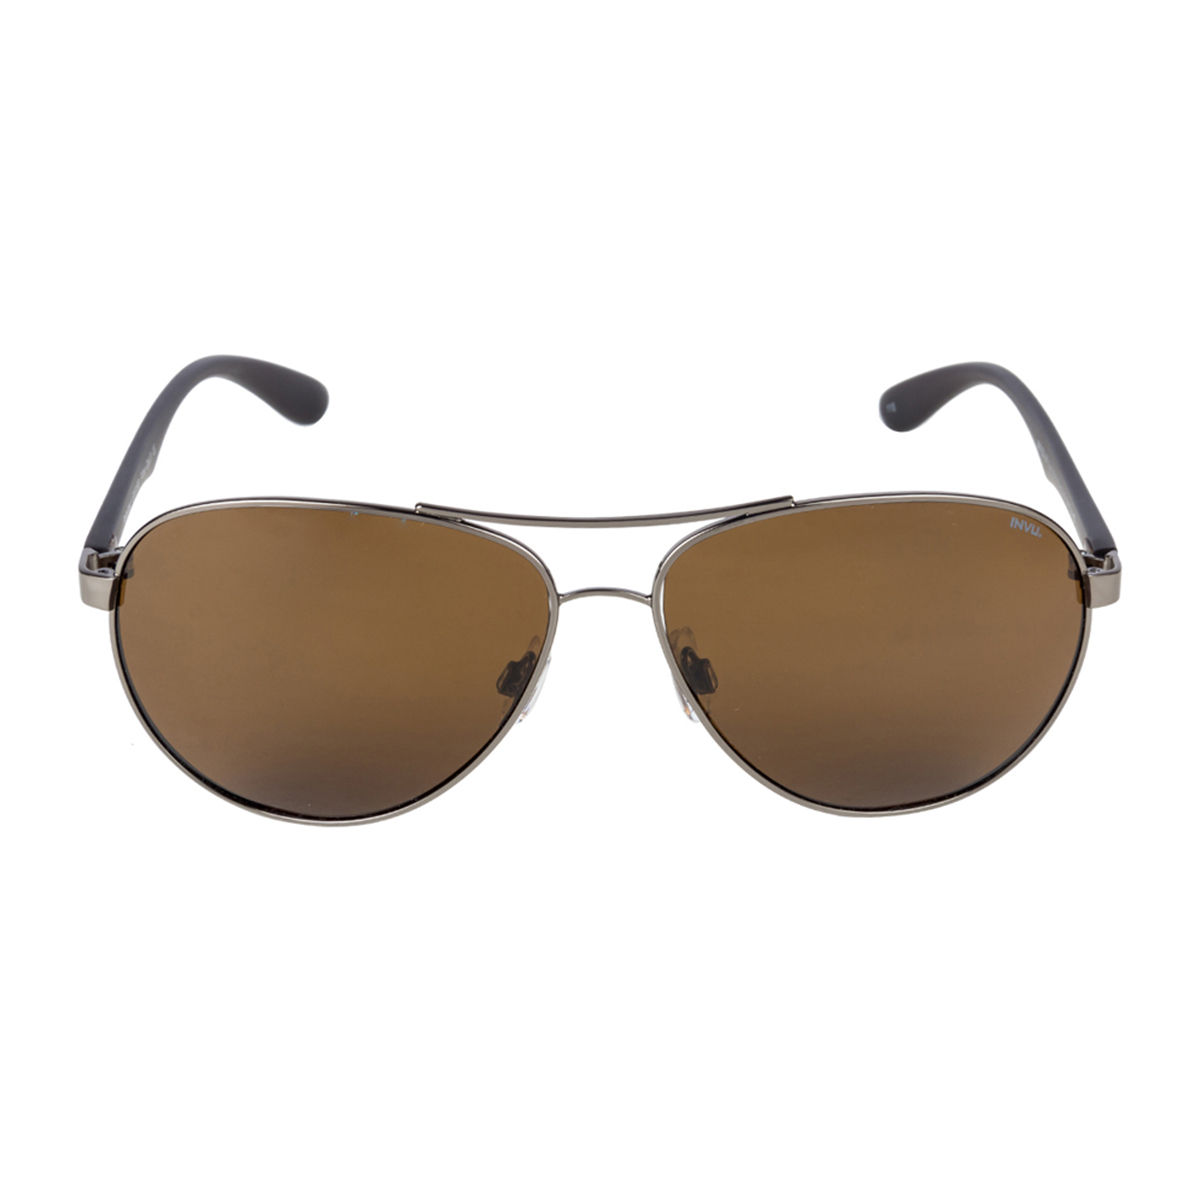 Invu Sunglasses Aviator With Brown Lens For Men